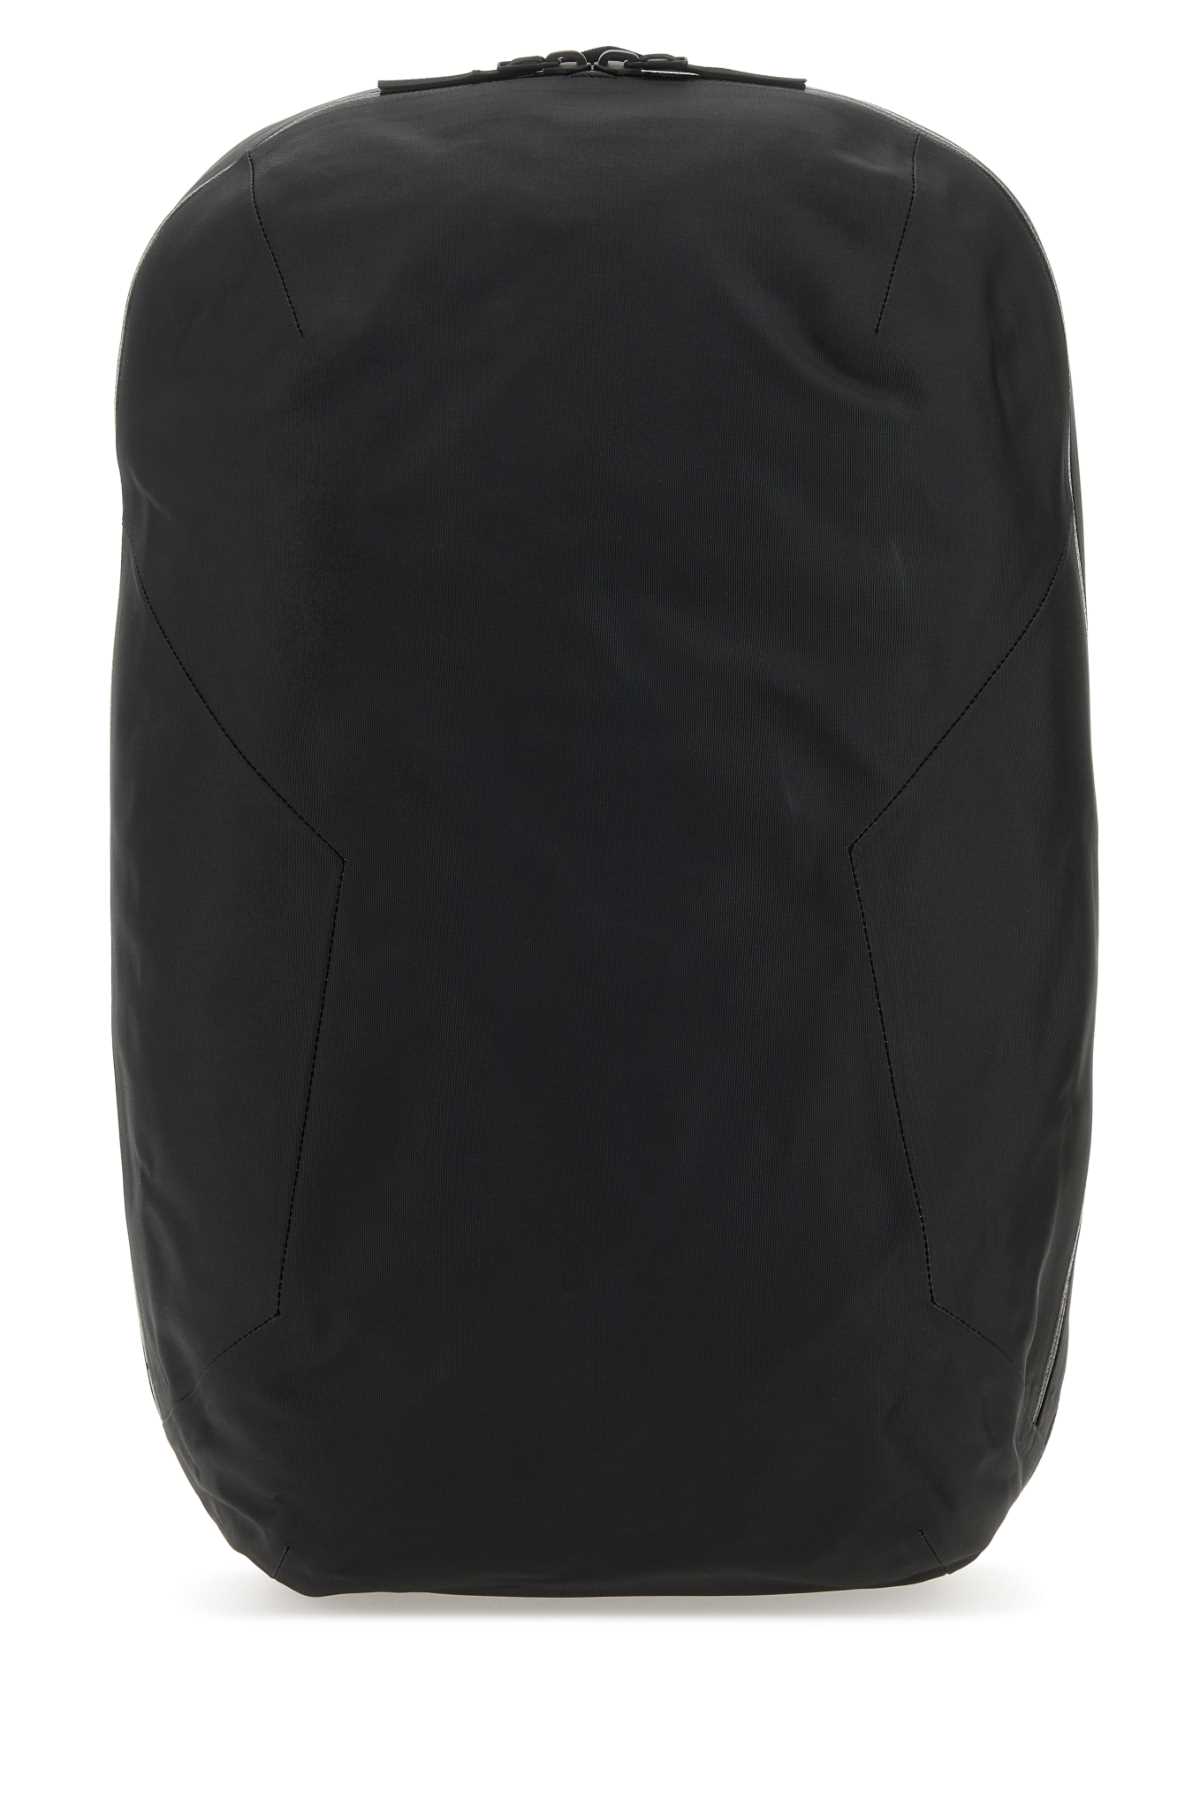 Arc'teryx Black Fabric Nomin Backpack